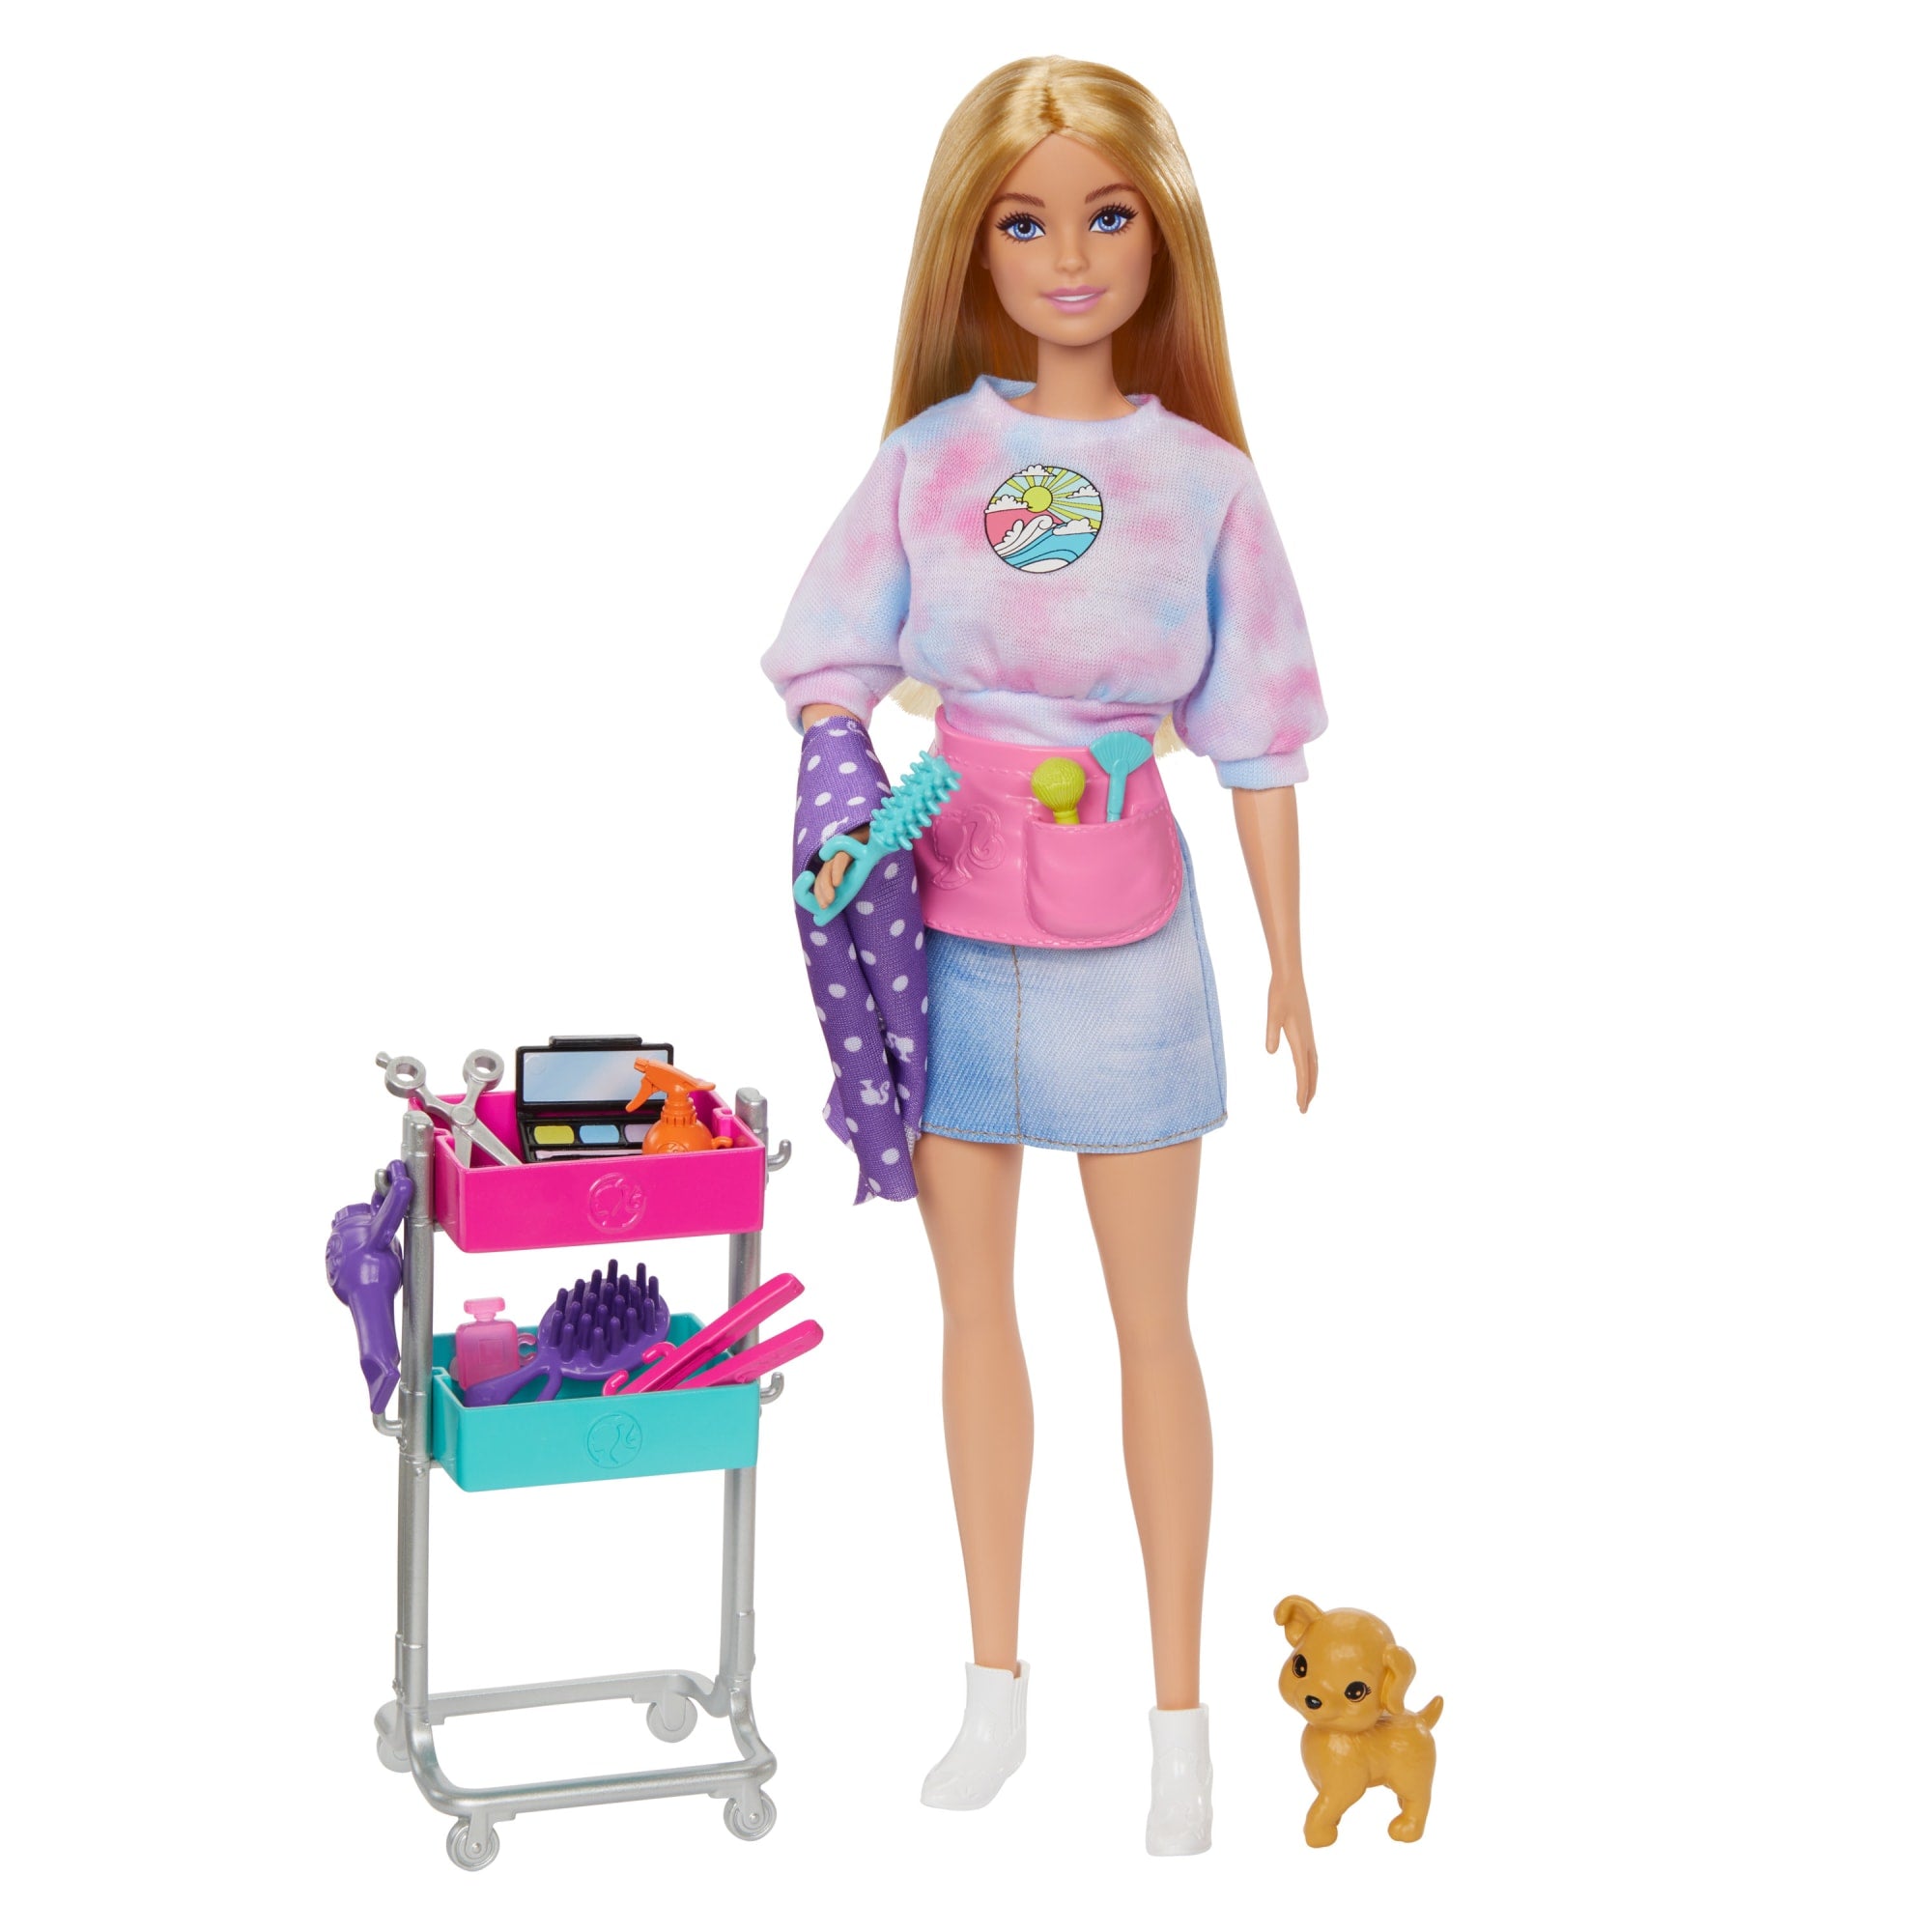 Barbie “Malibu” Stylist Doll | Mattel